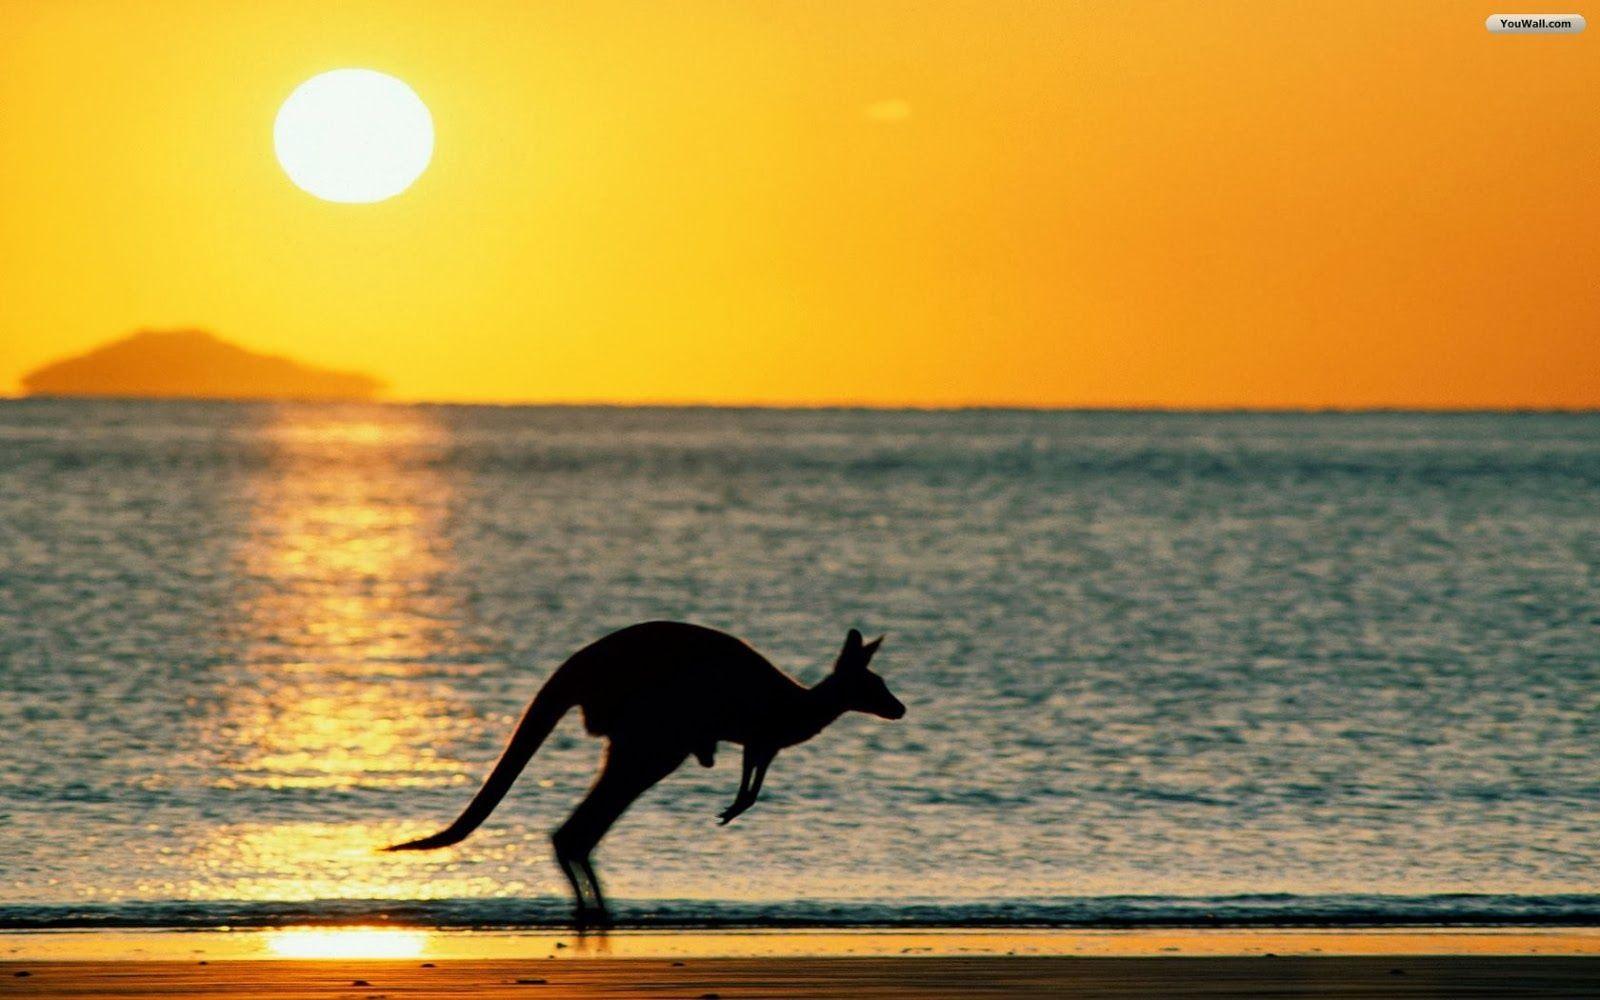 HD wallpaper: Australia Beaches Wallpaper. Australia picture, Places to travel, Australia fun facts